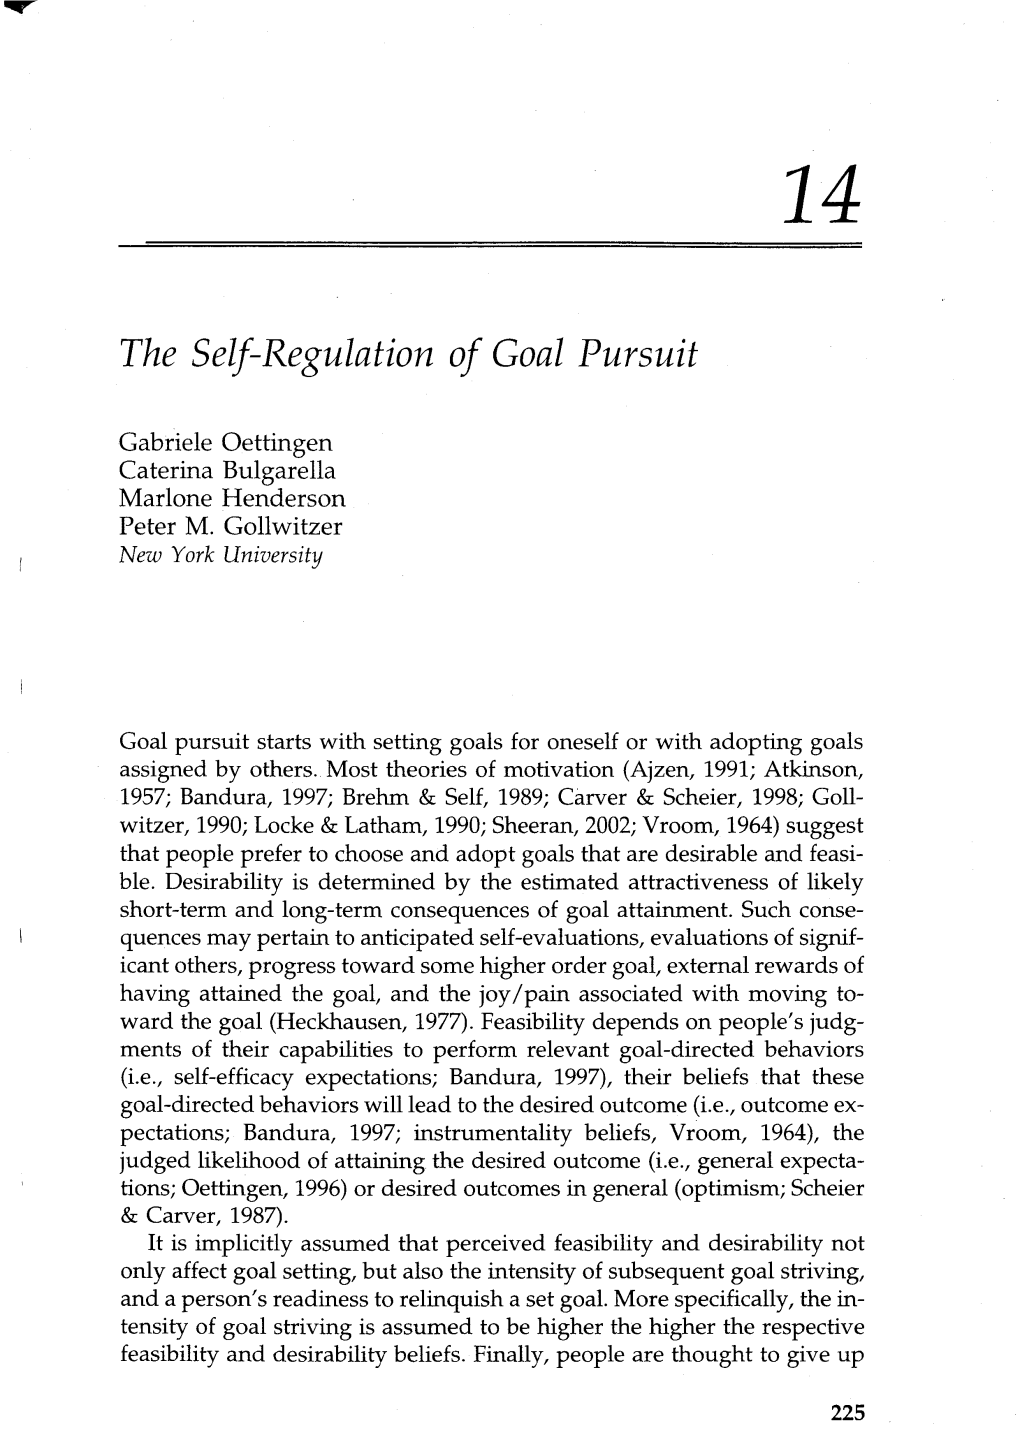 The Self-Regulation of Goal Pursuit